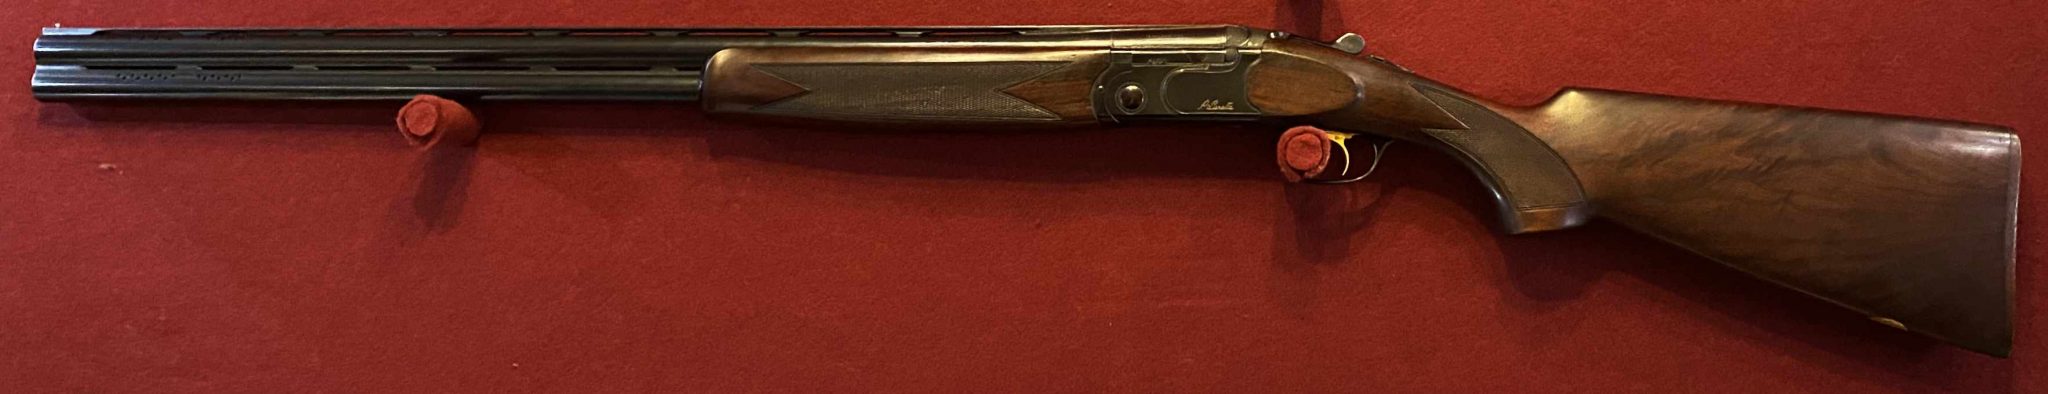 shotgun used for sale